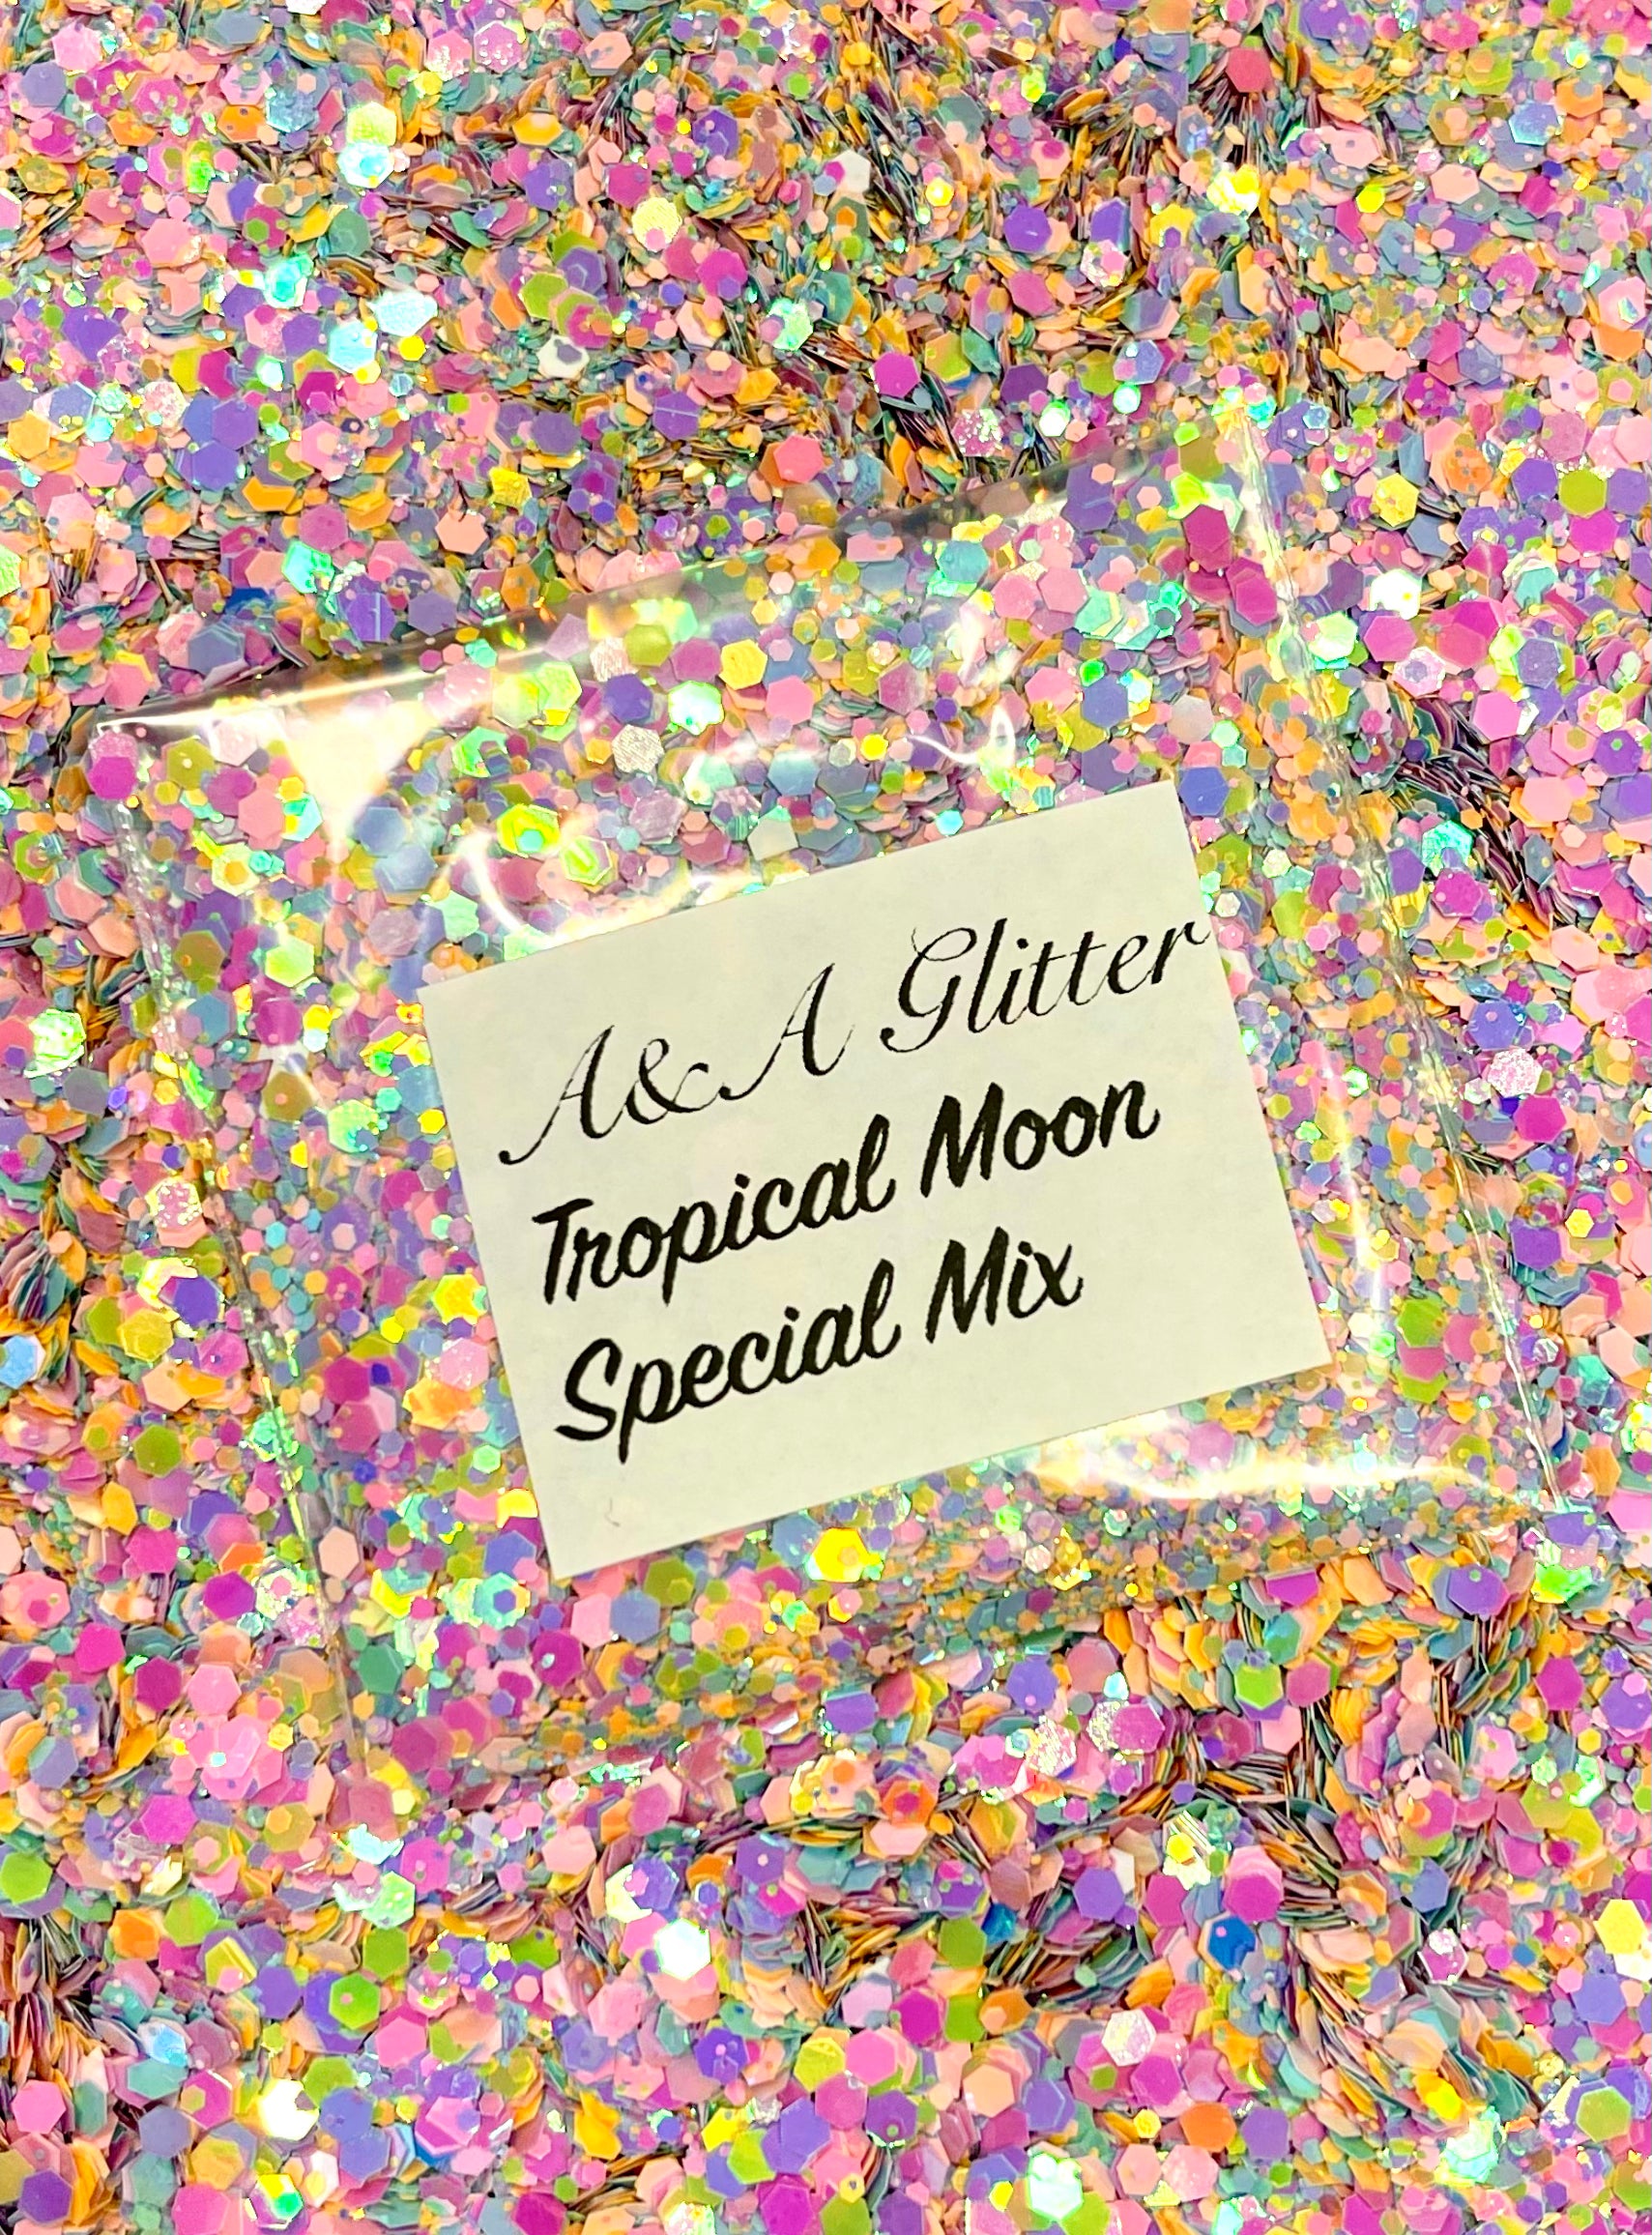 Tropical Moon - Special Mix